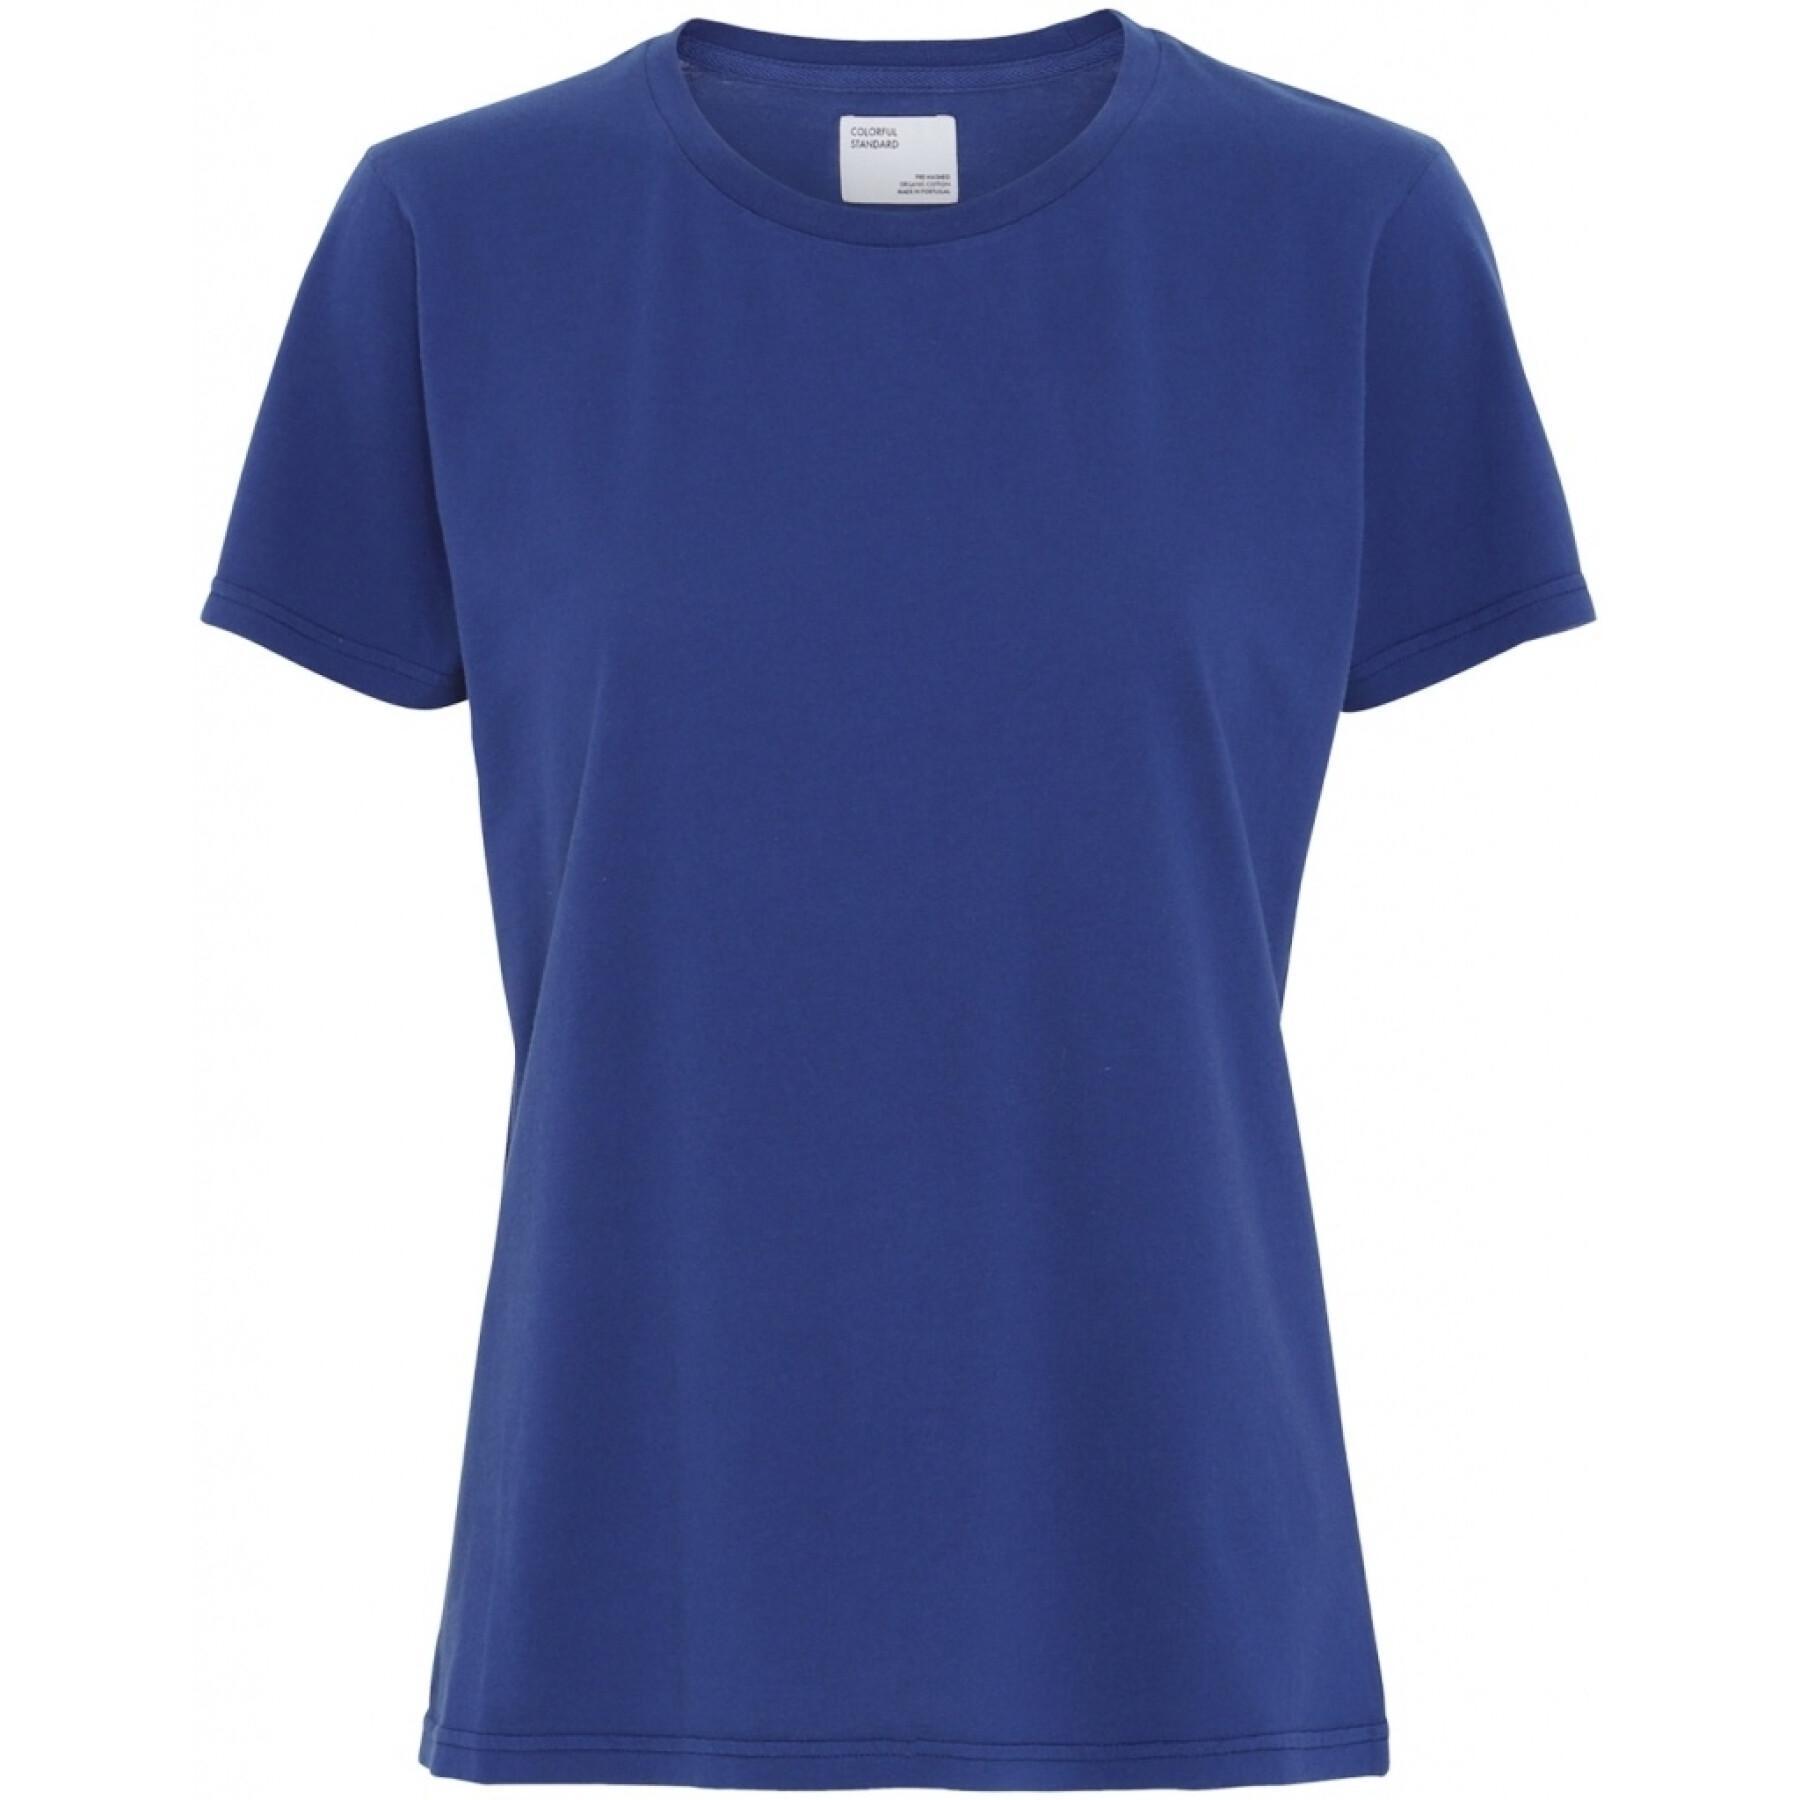 Camiseta feminina Colorful Standard Light Organic royal blue